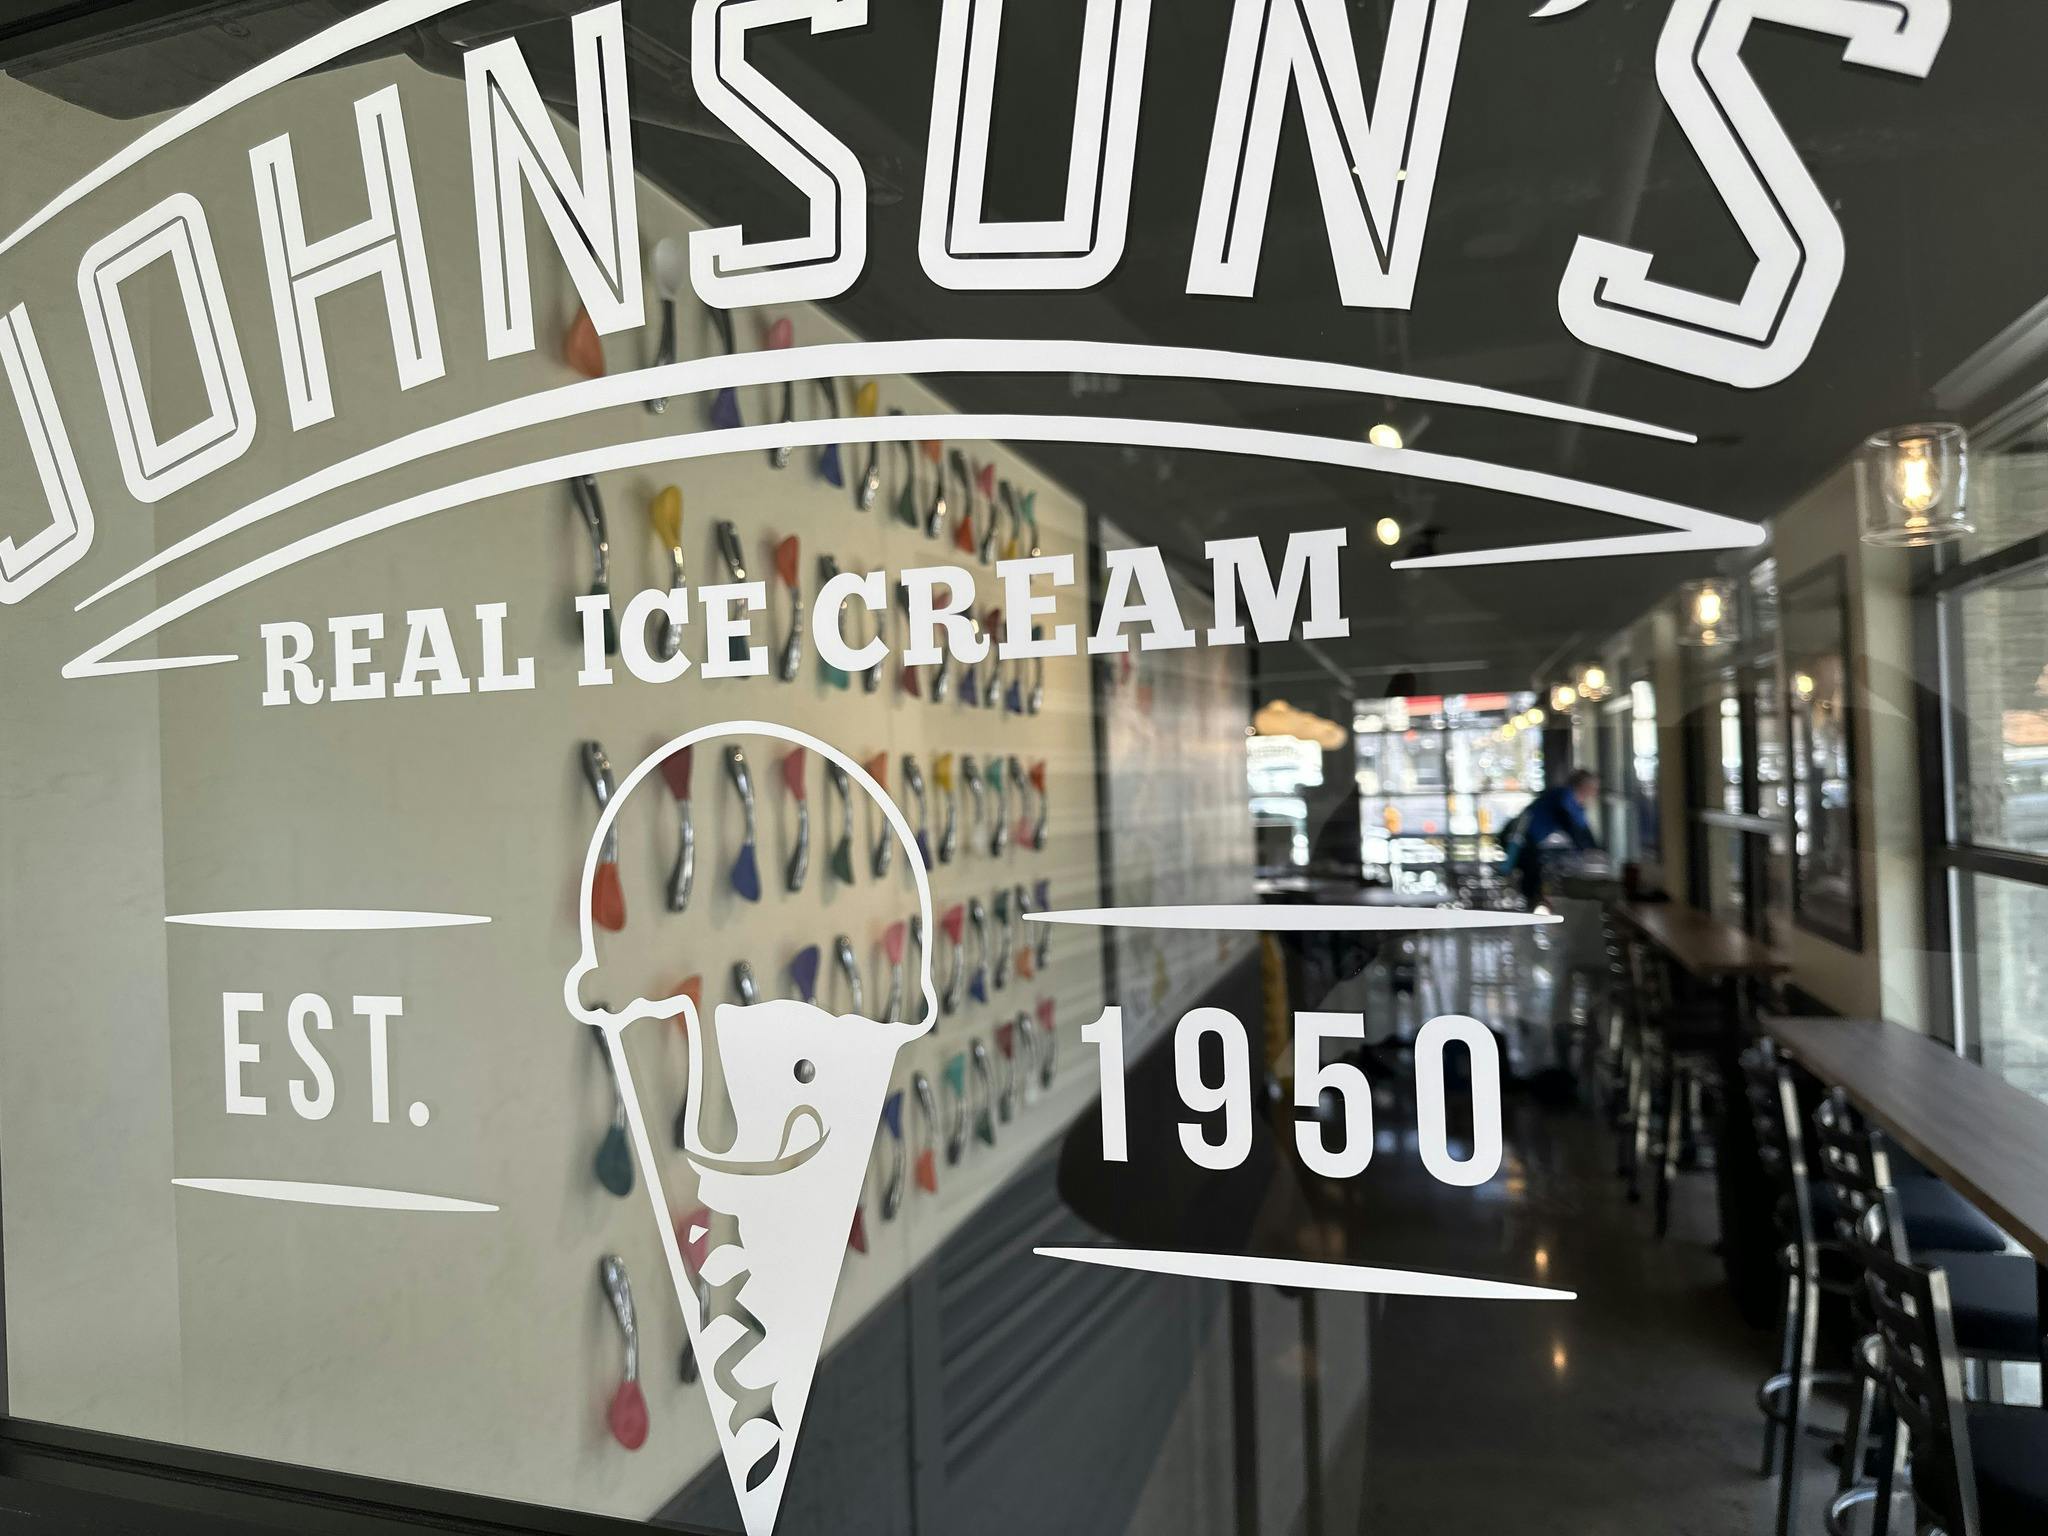 Image of Johnson's Real Ice Cream Grandview location